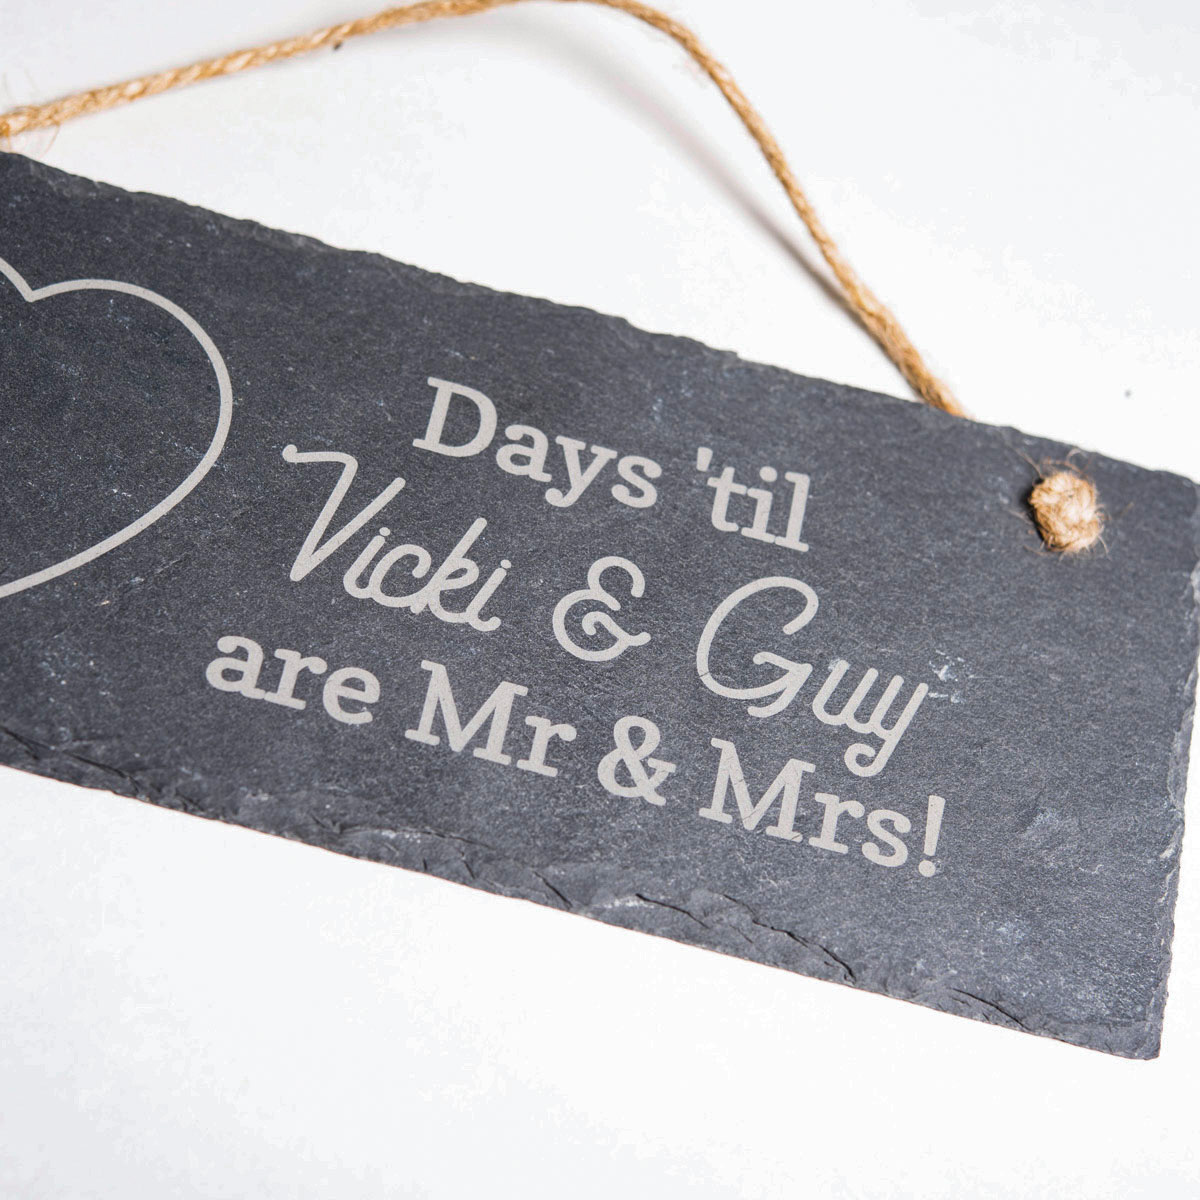 Personalised Hanging Slate Sign - Heart Wedding Countdown